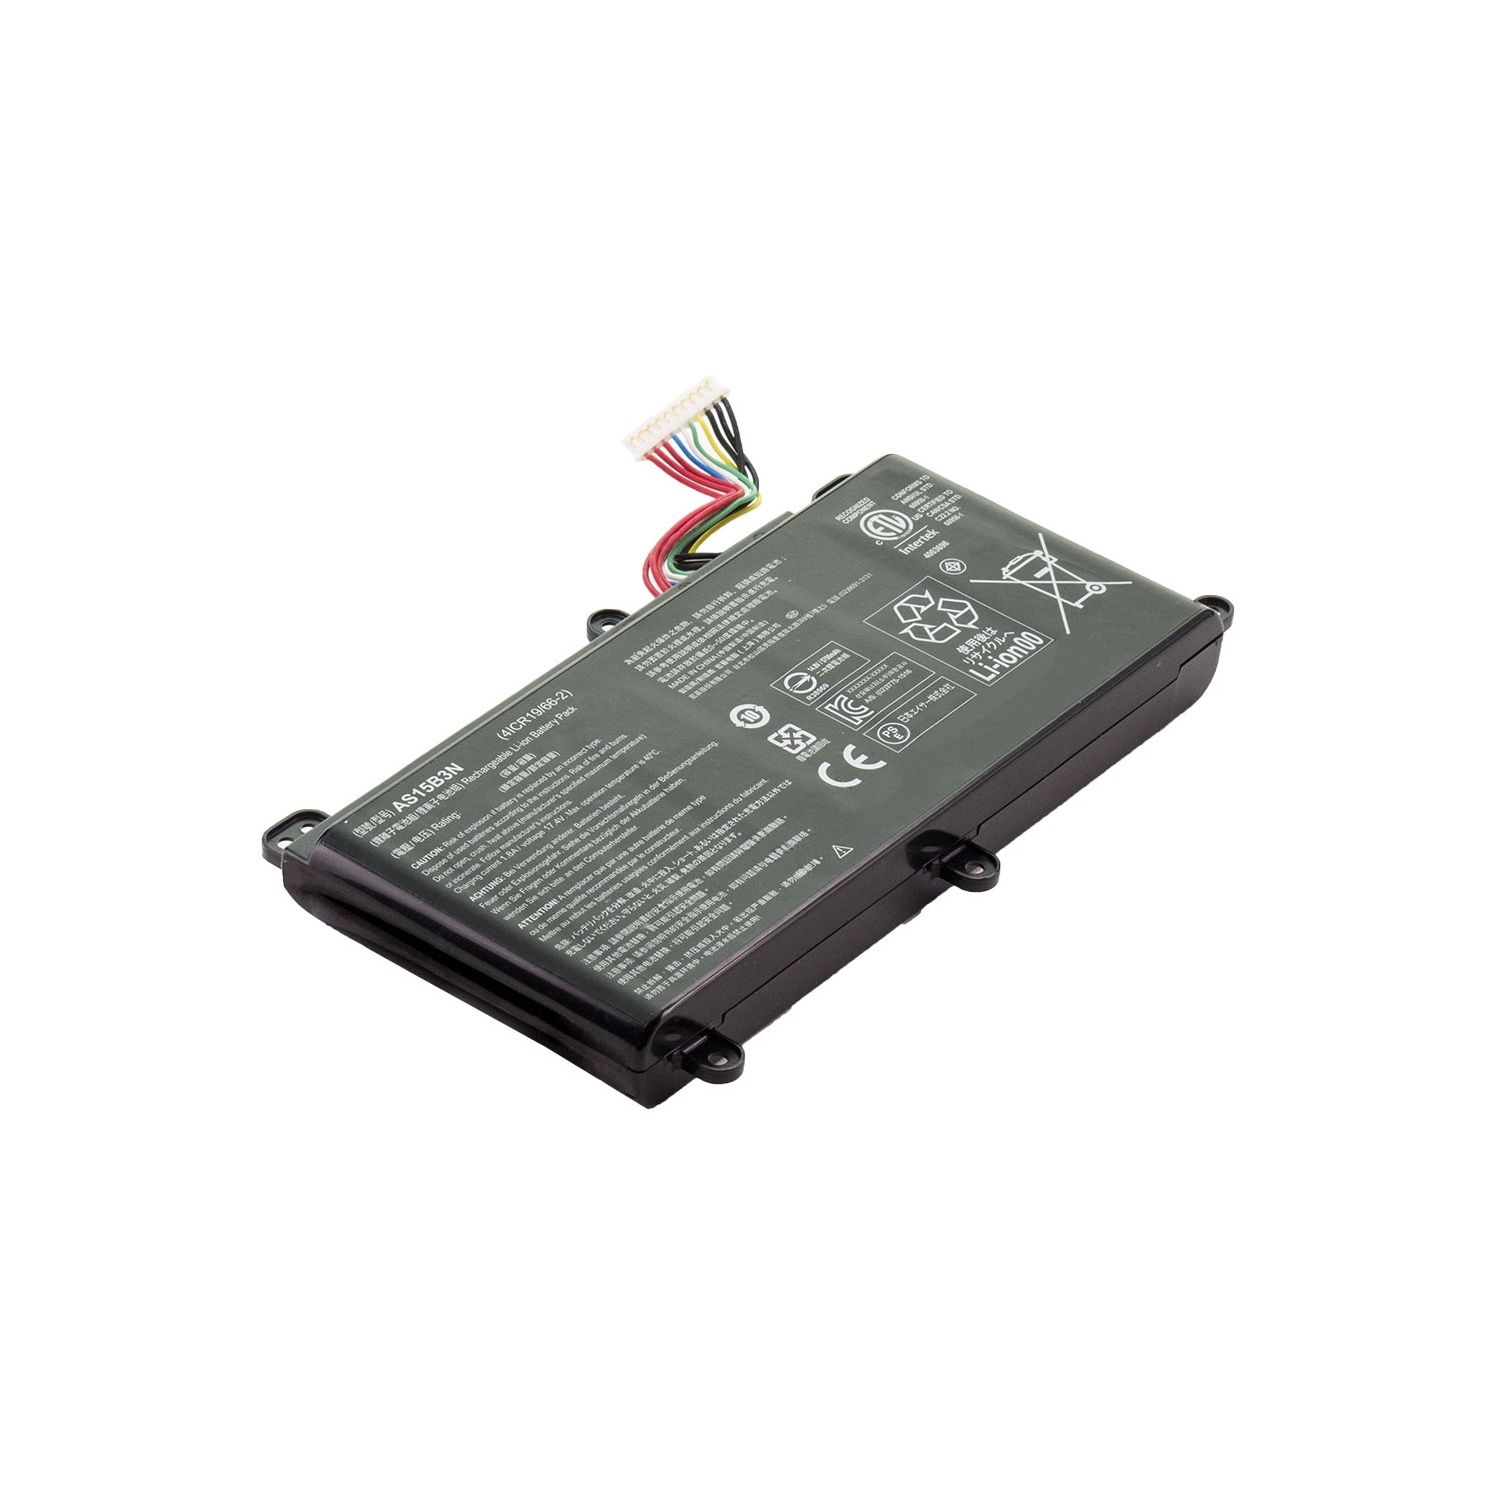 BATTDEPOT NEW Laptop Battery for Acer Predator 15 G9-592-7308 AS15B3N KT.00803.004 KT.00803.005